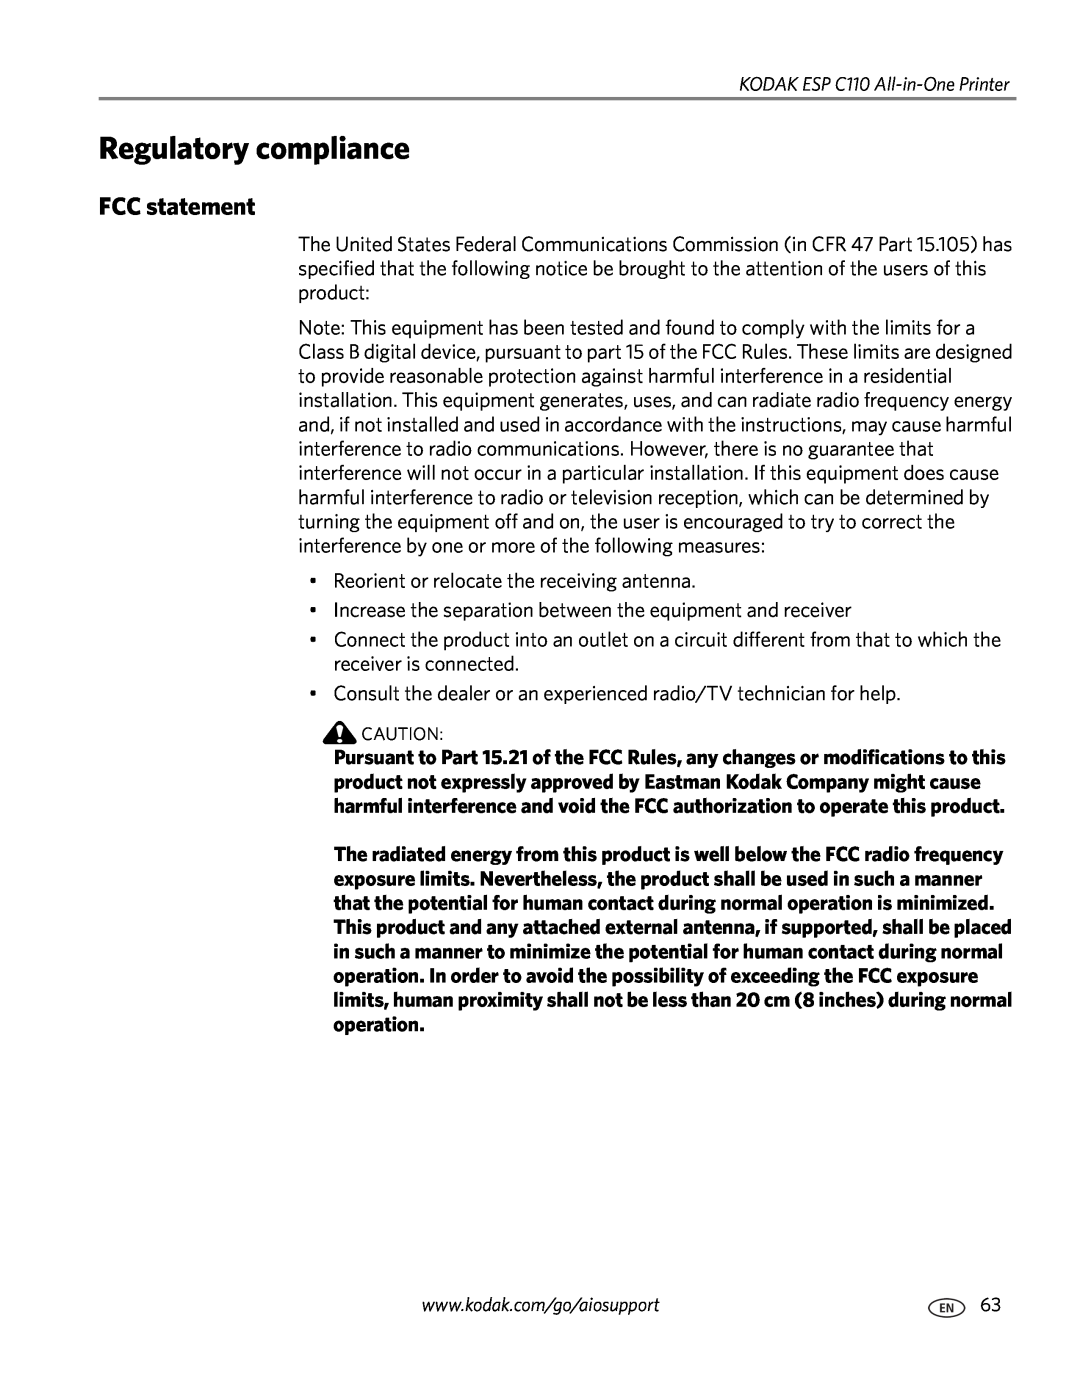 Kodak C110 manual Regulatory compliance, FCC statement 